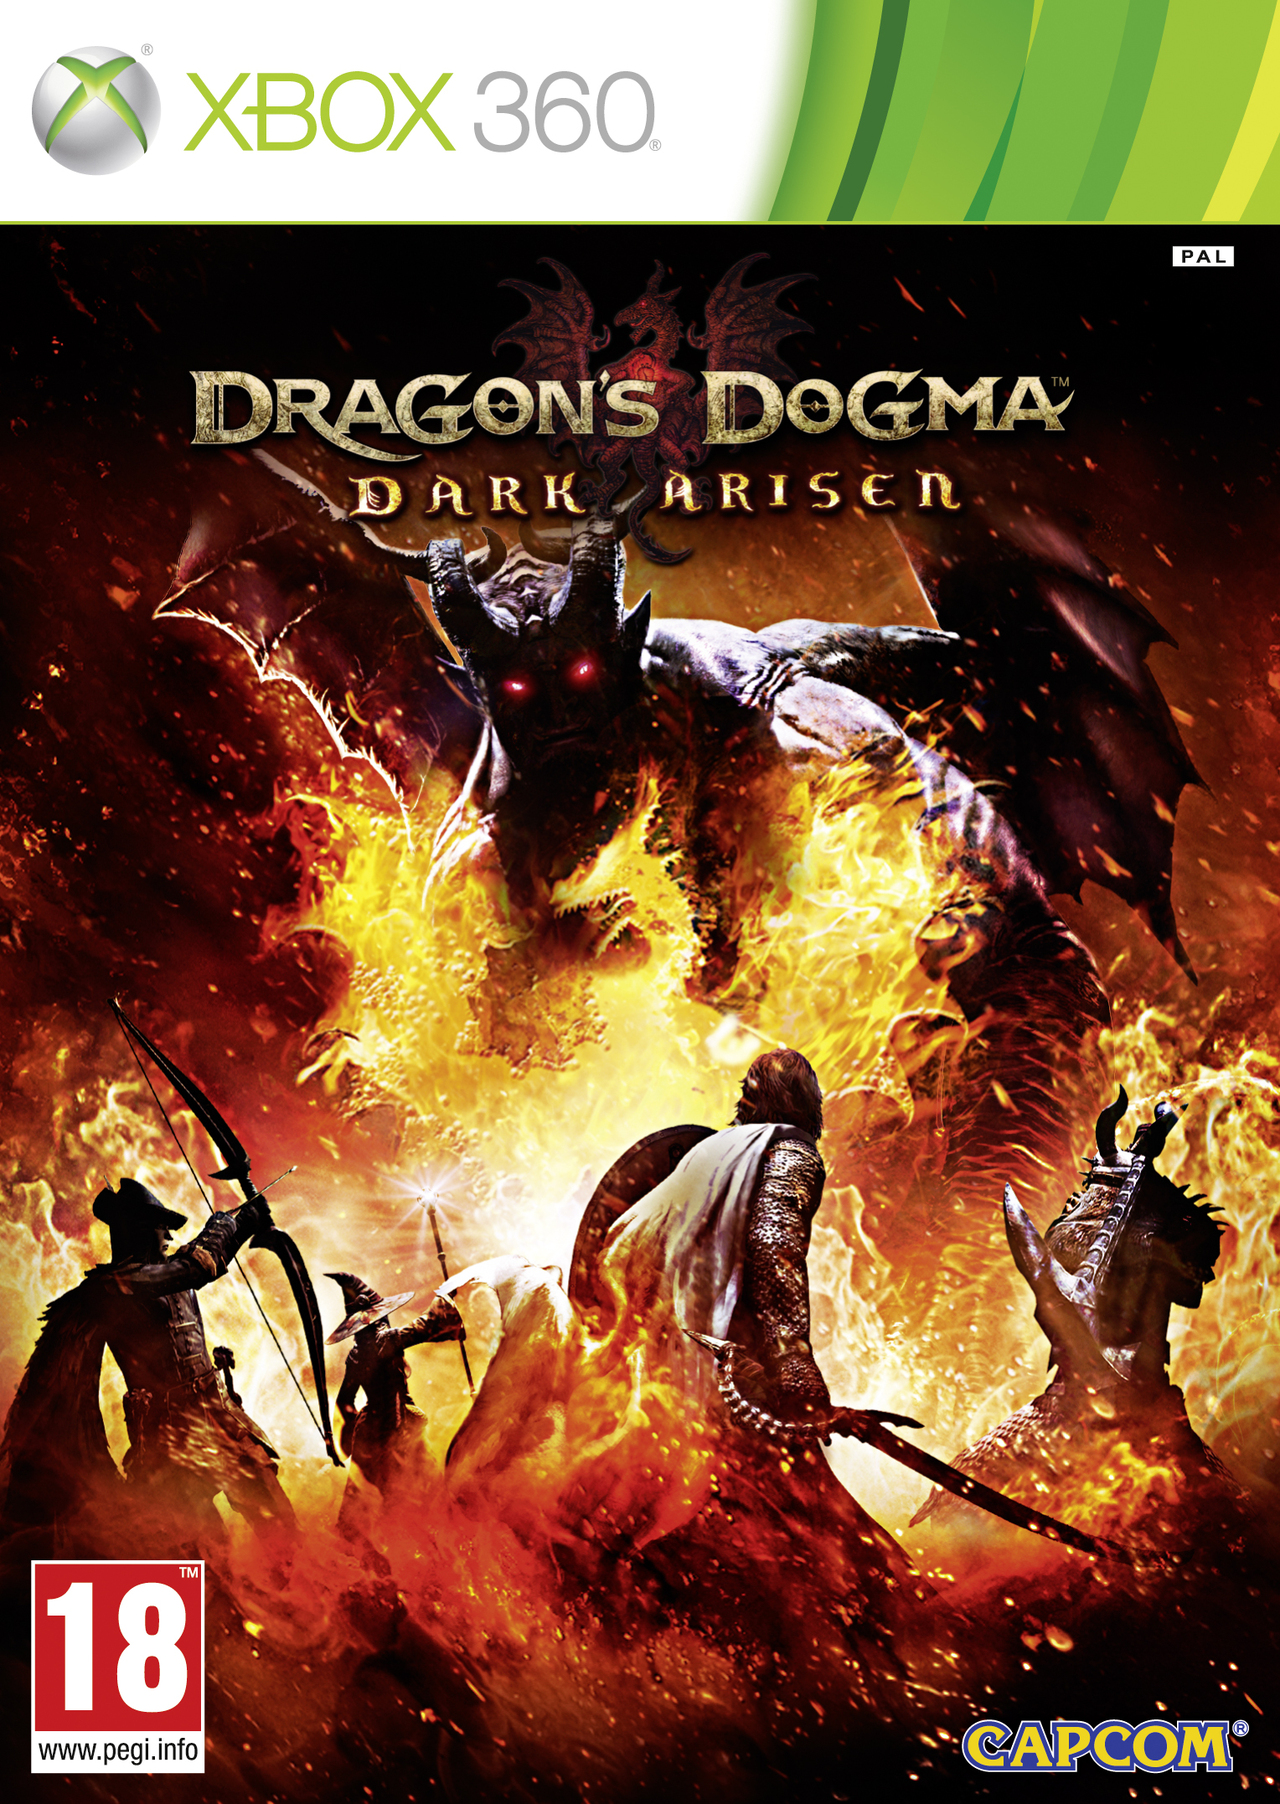 http://image.jeuxvideo.com/images/jaquettes/00046606/jaquette-dragon-s-dogma-dark-arisen-xbox-360-cover-avant-g-1358948834.jpg